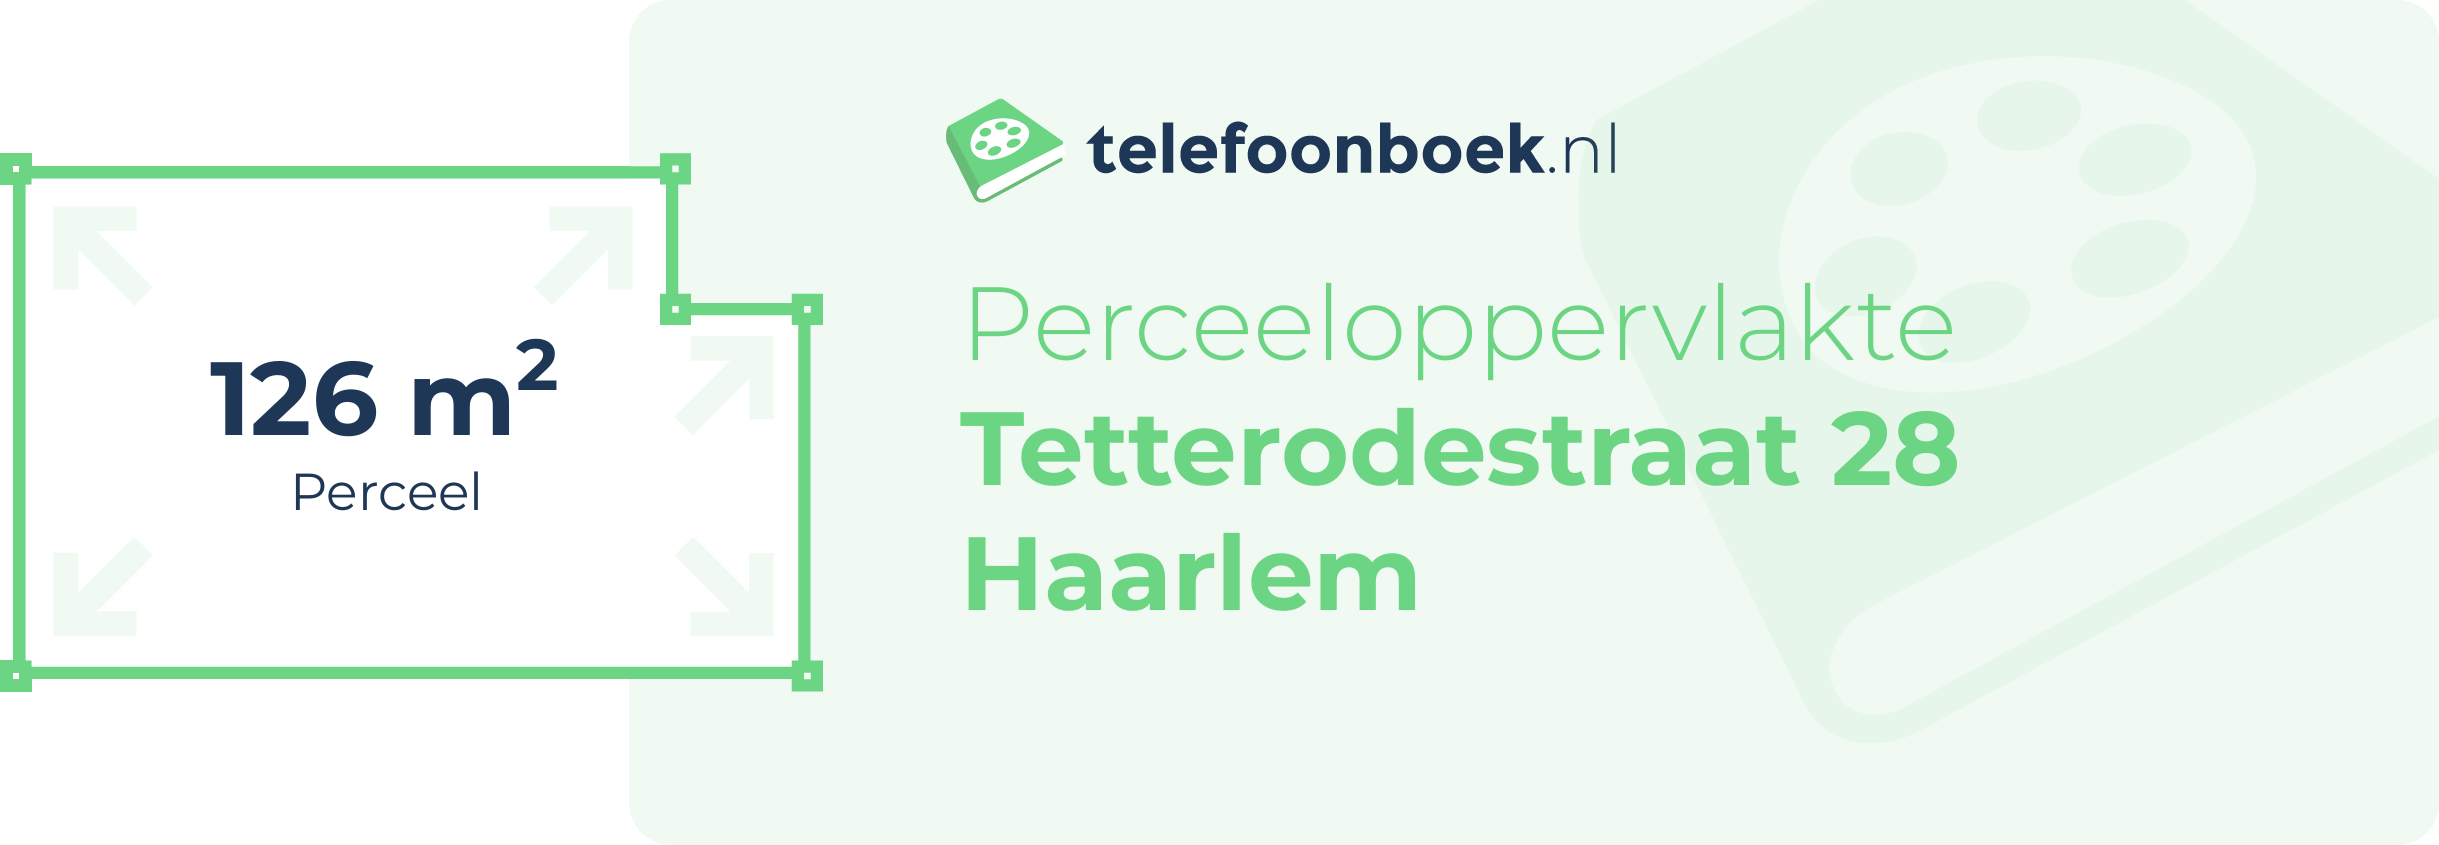 Perceeloppervlakte Tetterodestraat 28 Haarlem